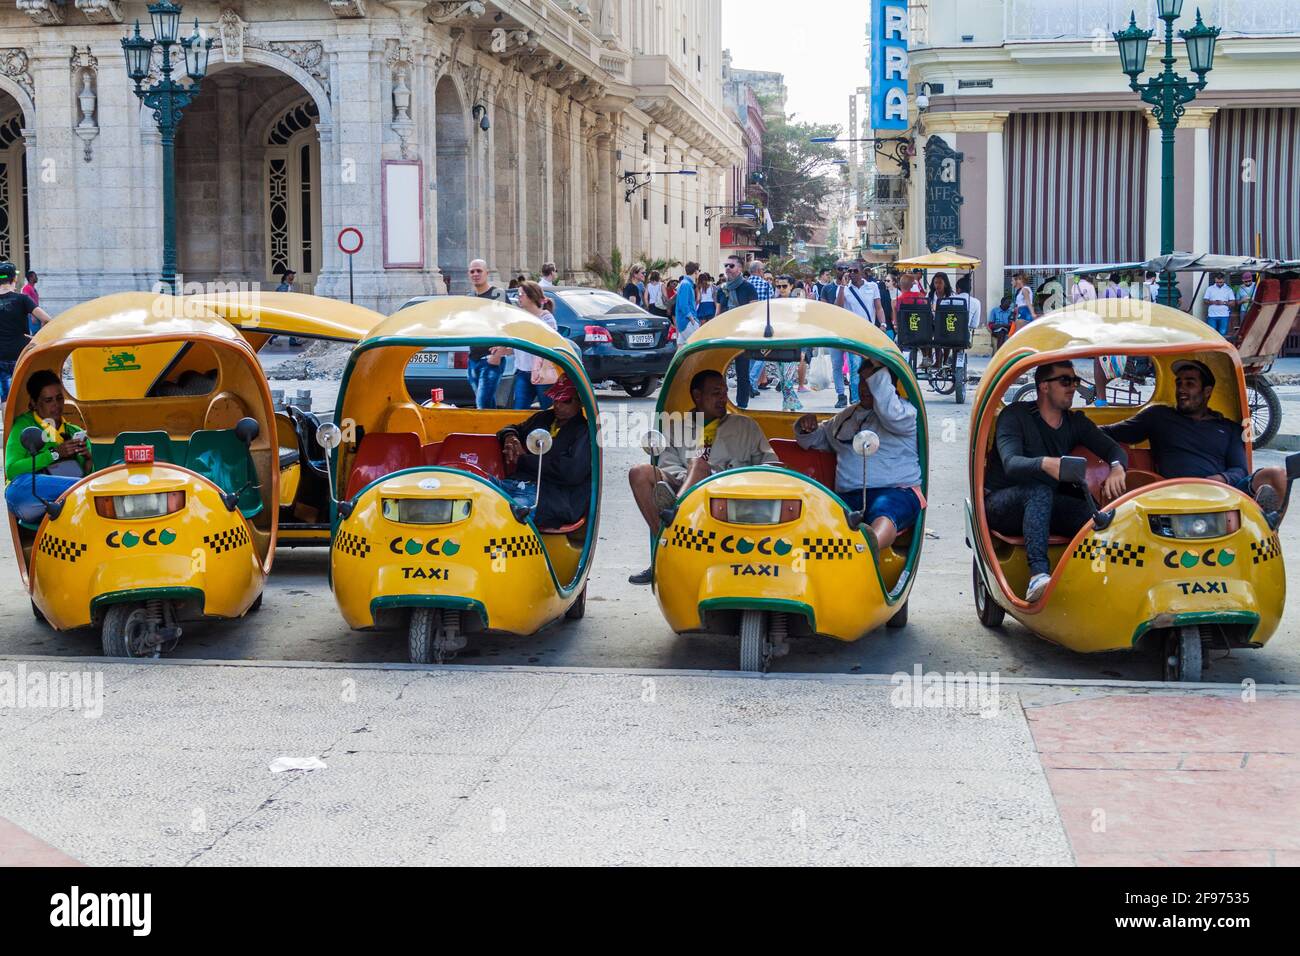 HAVANA, CUBA - FEB 20, 2016: Row of coco taxis in the center of Havana. Stock Photo